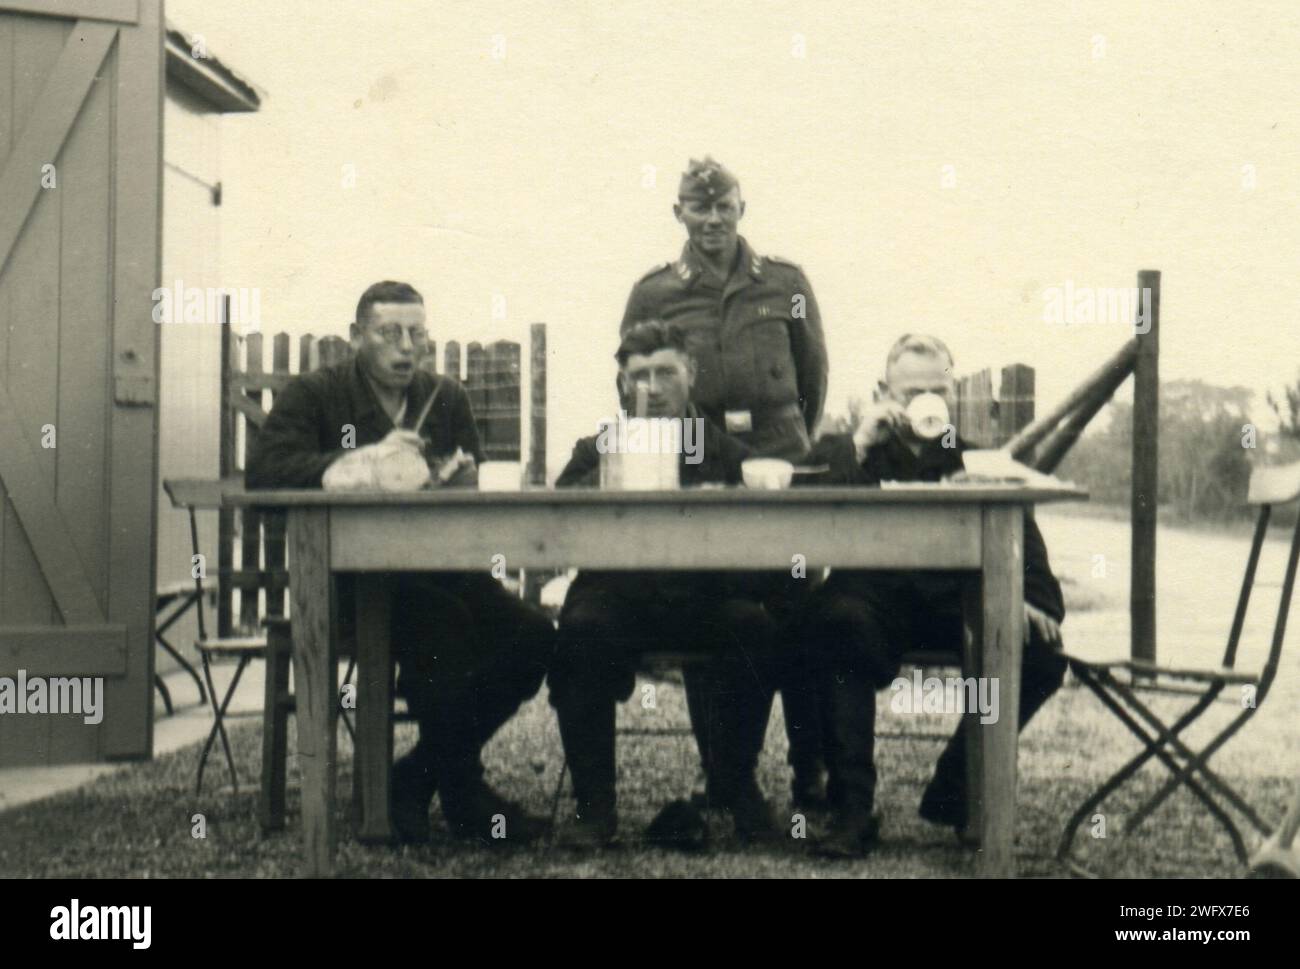 wwii - seconde Guerre mondiale, soldats allemands mangeant, Allemagne - 1940 Banque D'Images